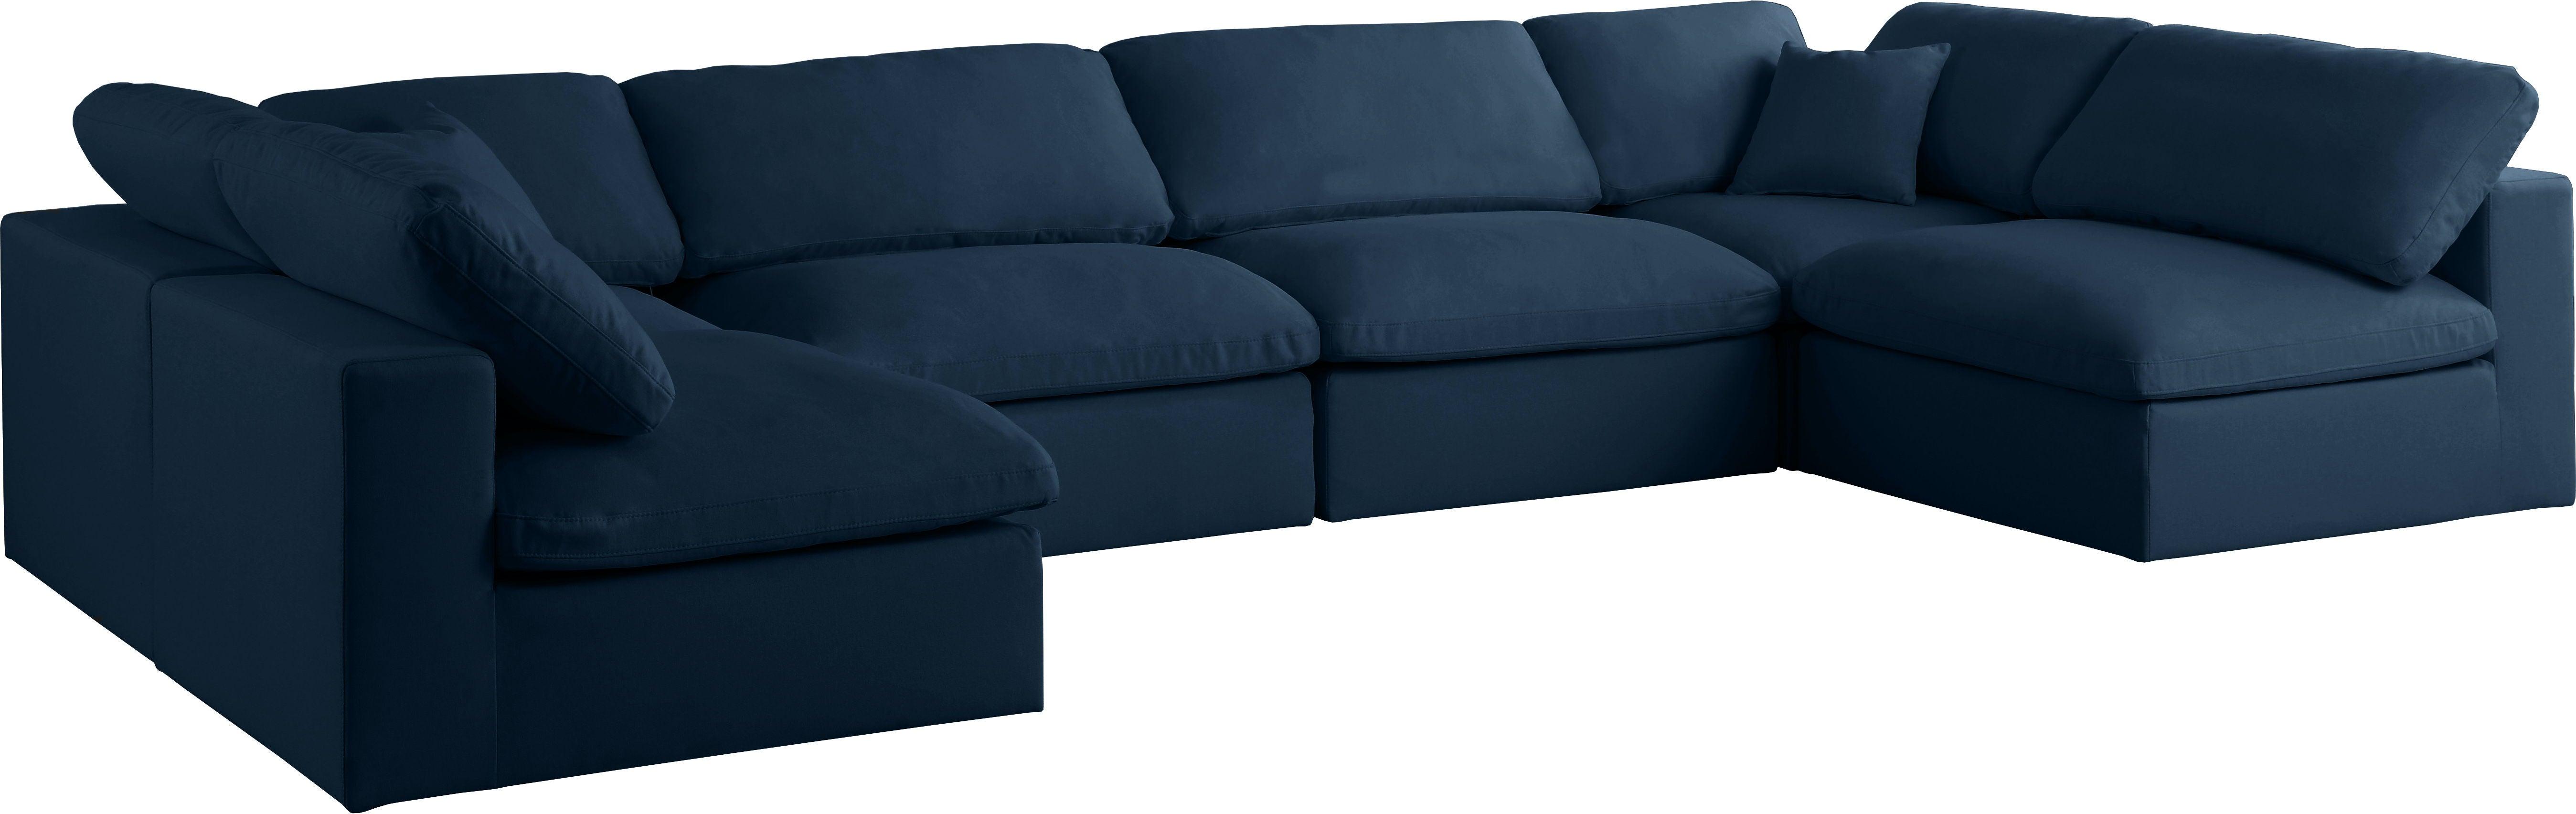 Meridian Furniture - Plush - Velvet Standart Comfort Modular Sectional 6 Piece - Navy - 5th Avenue Furniture